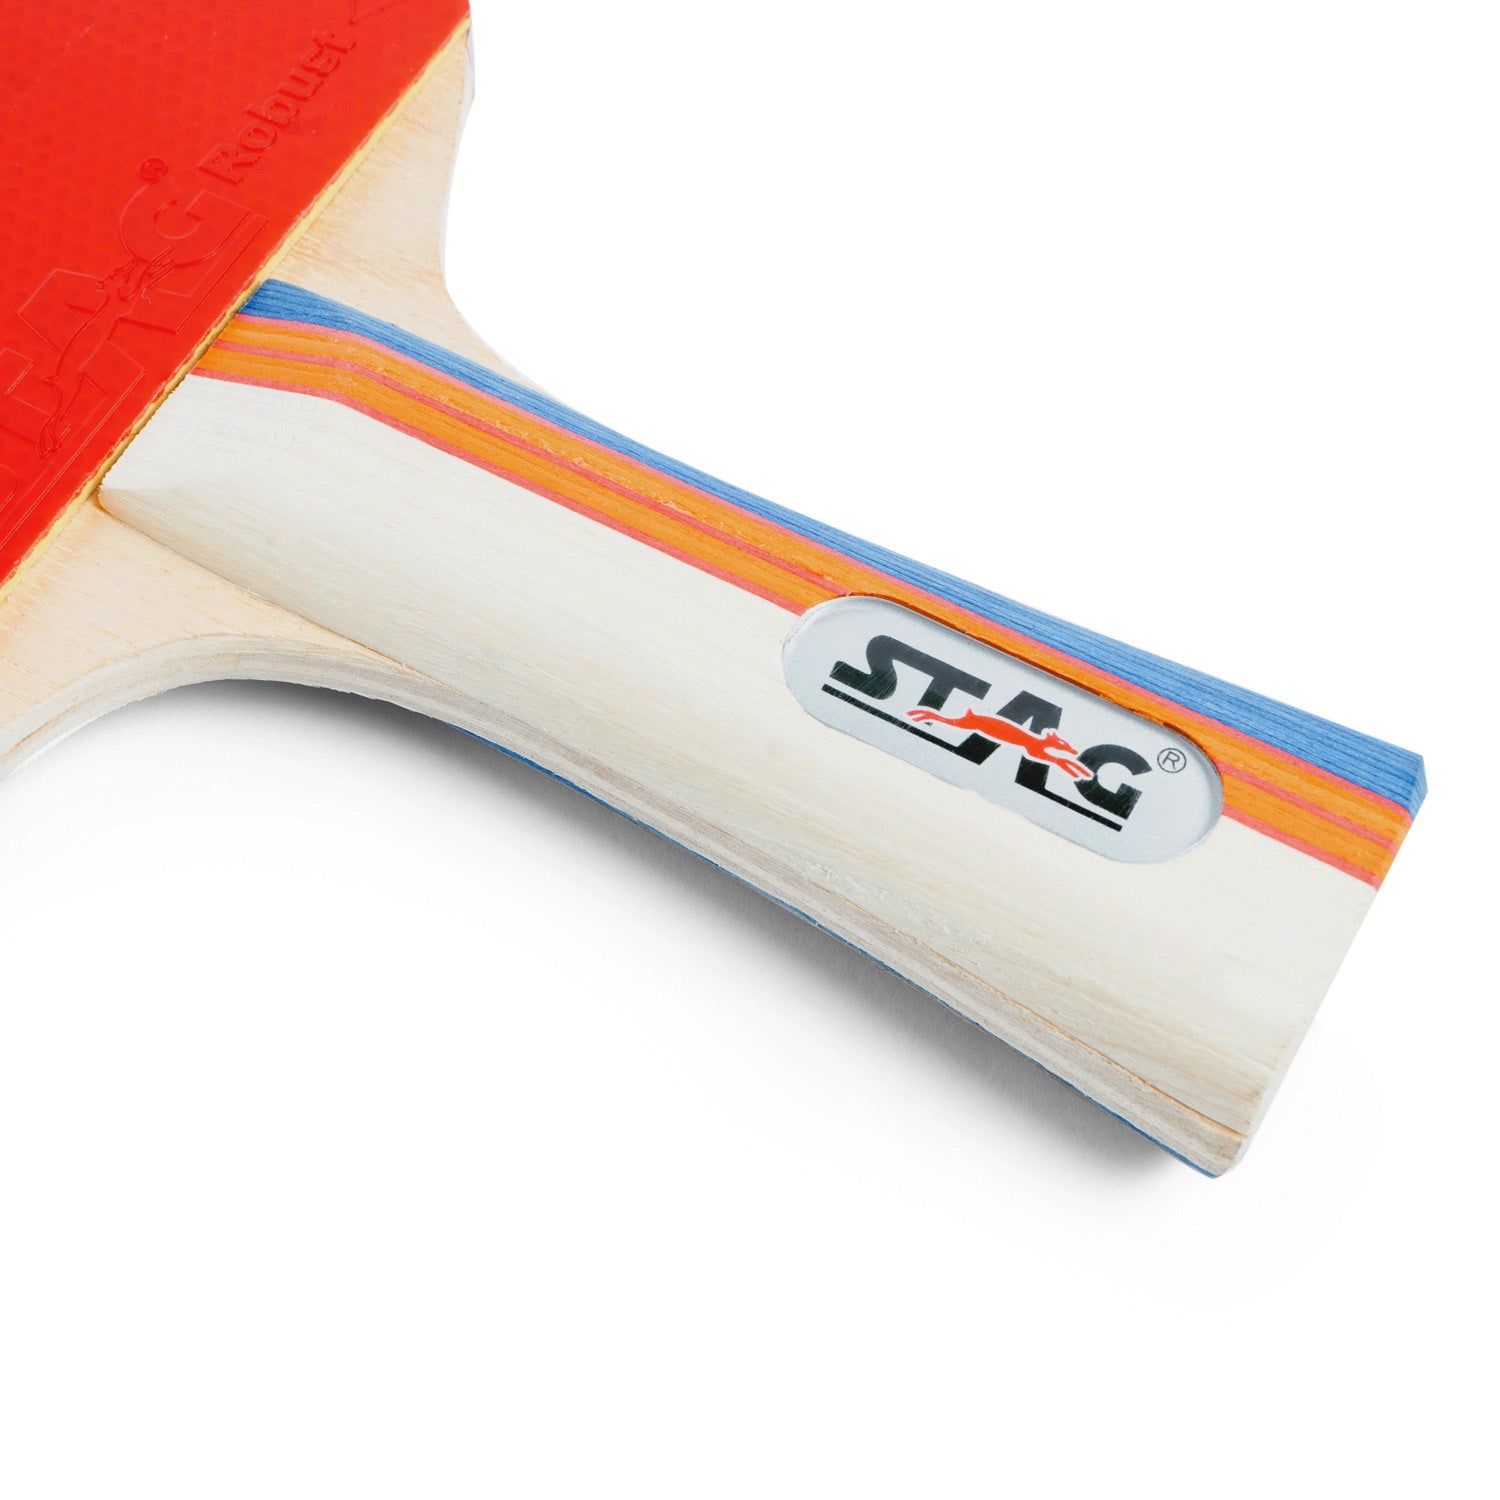 STAG 5 Star Table Tennis (T.T) Racquet| Premium ITTF Approved Rubber| Beginner-Intermediate Series T.T Racquet